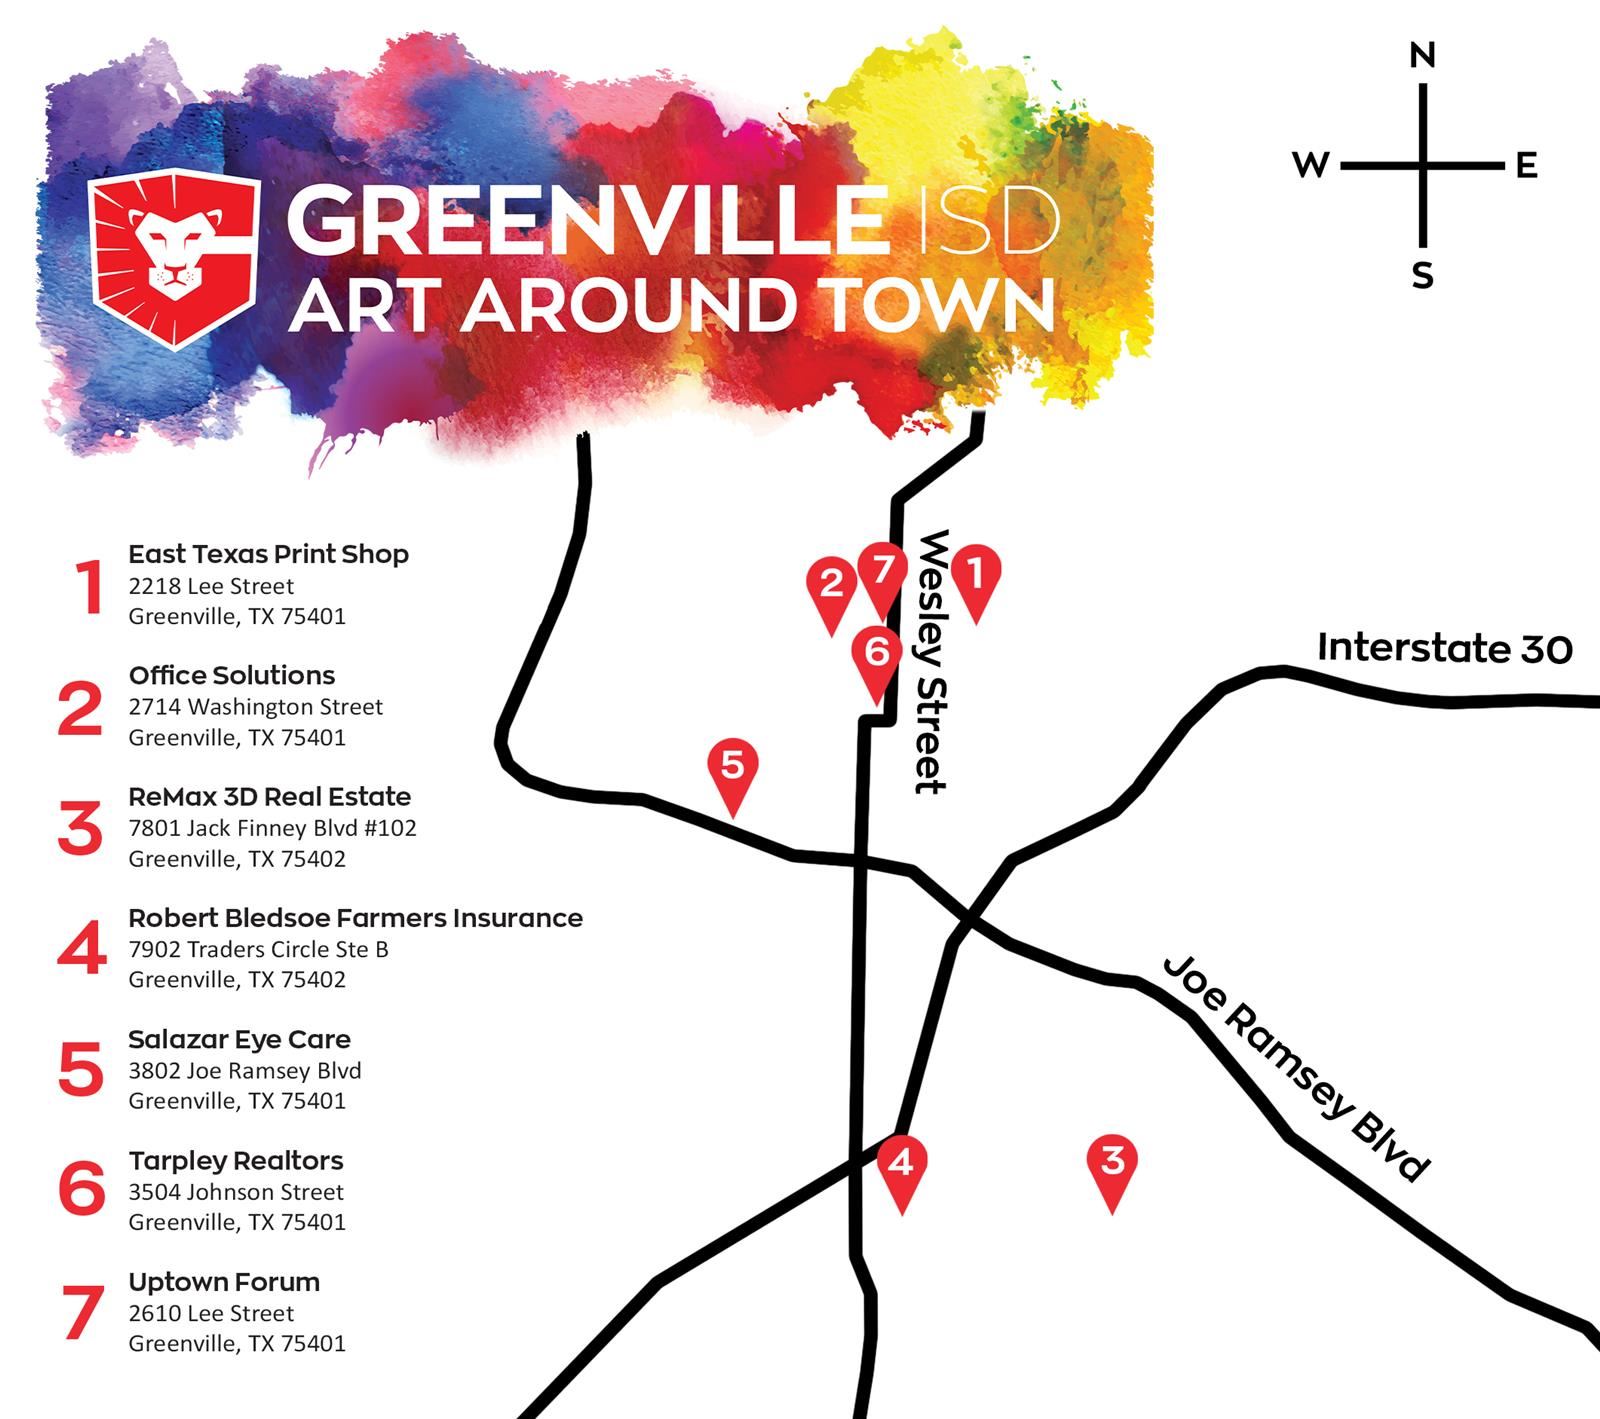 GISD Art Around Town Map 